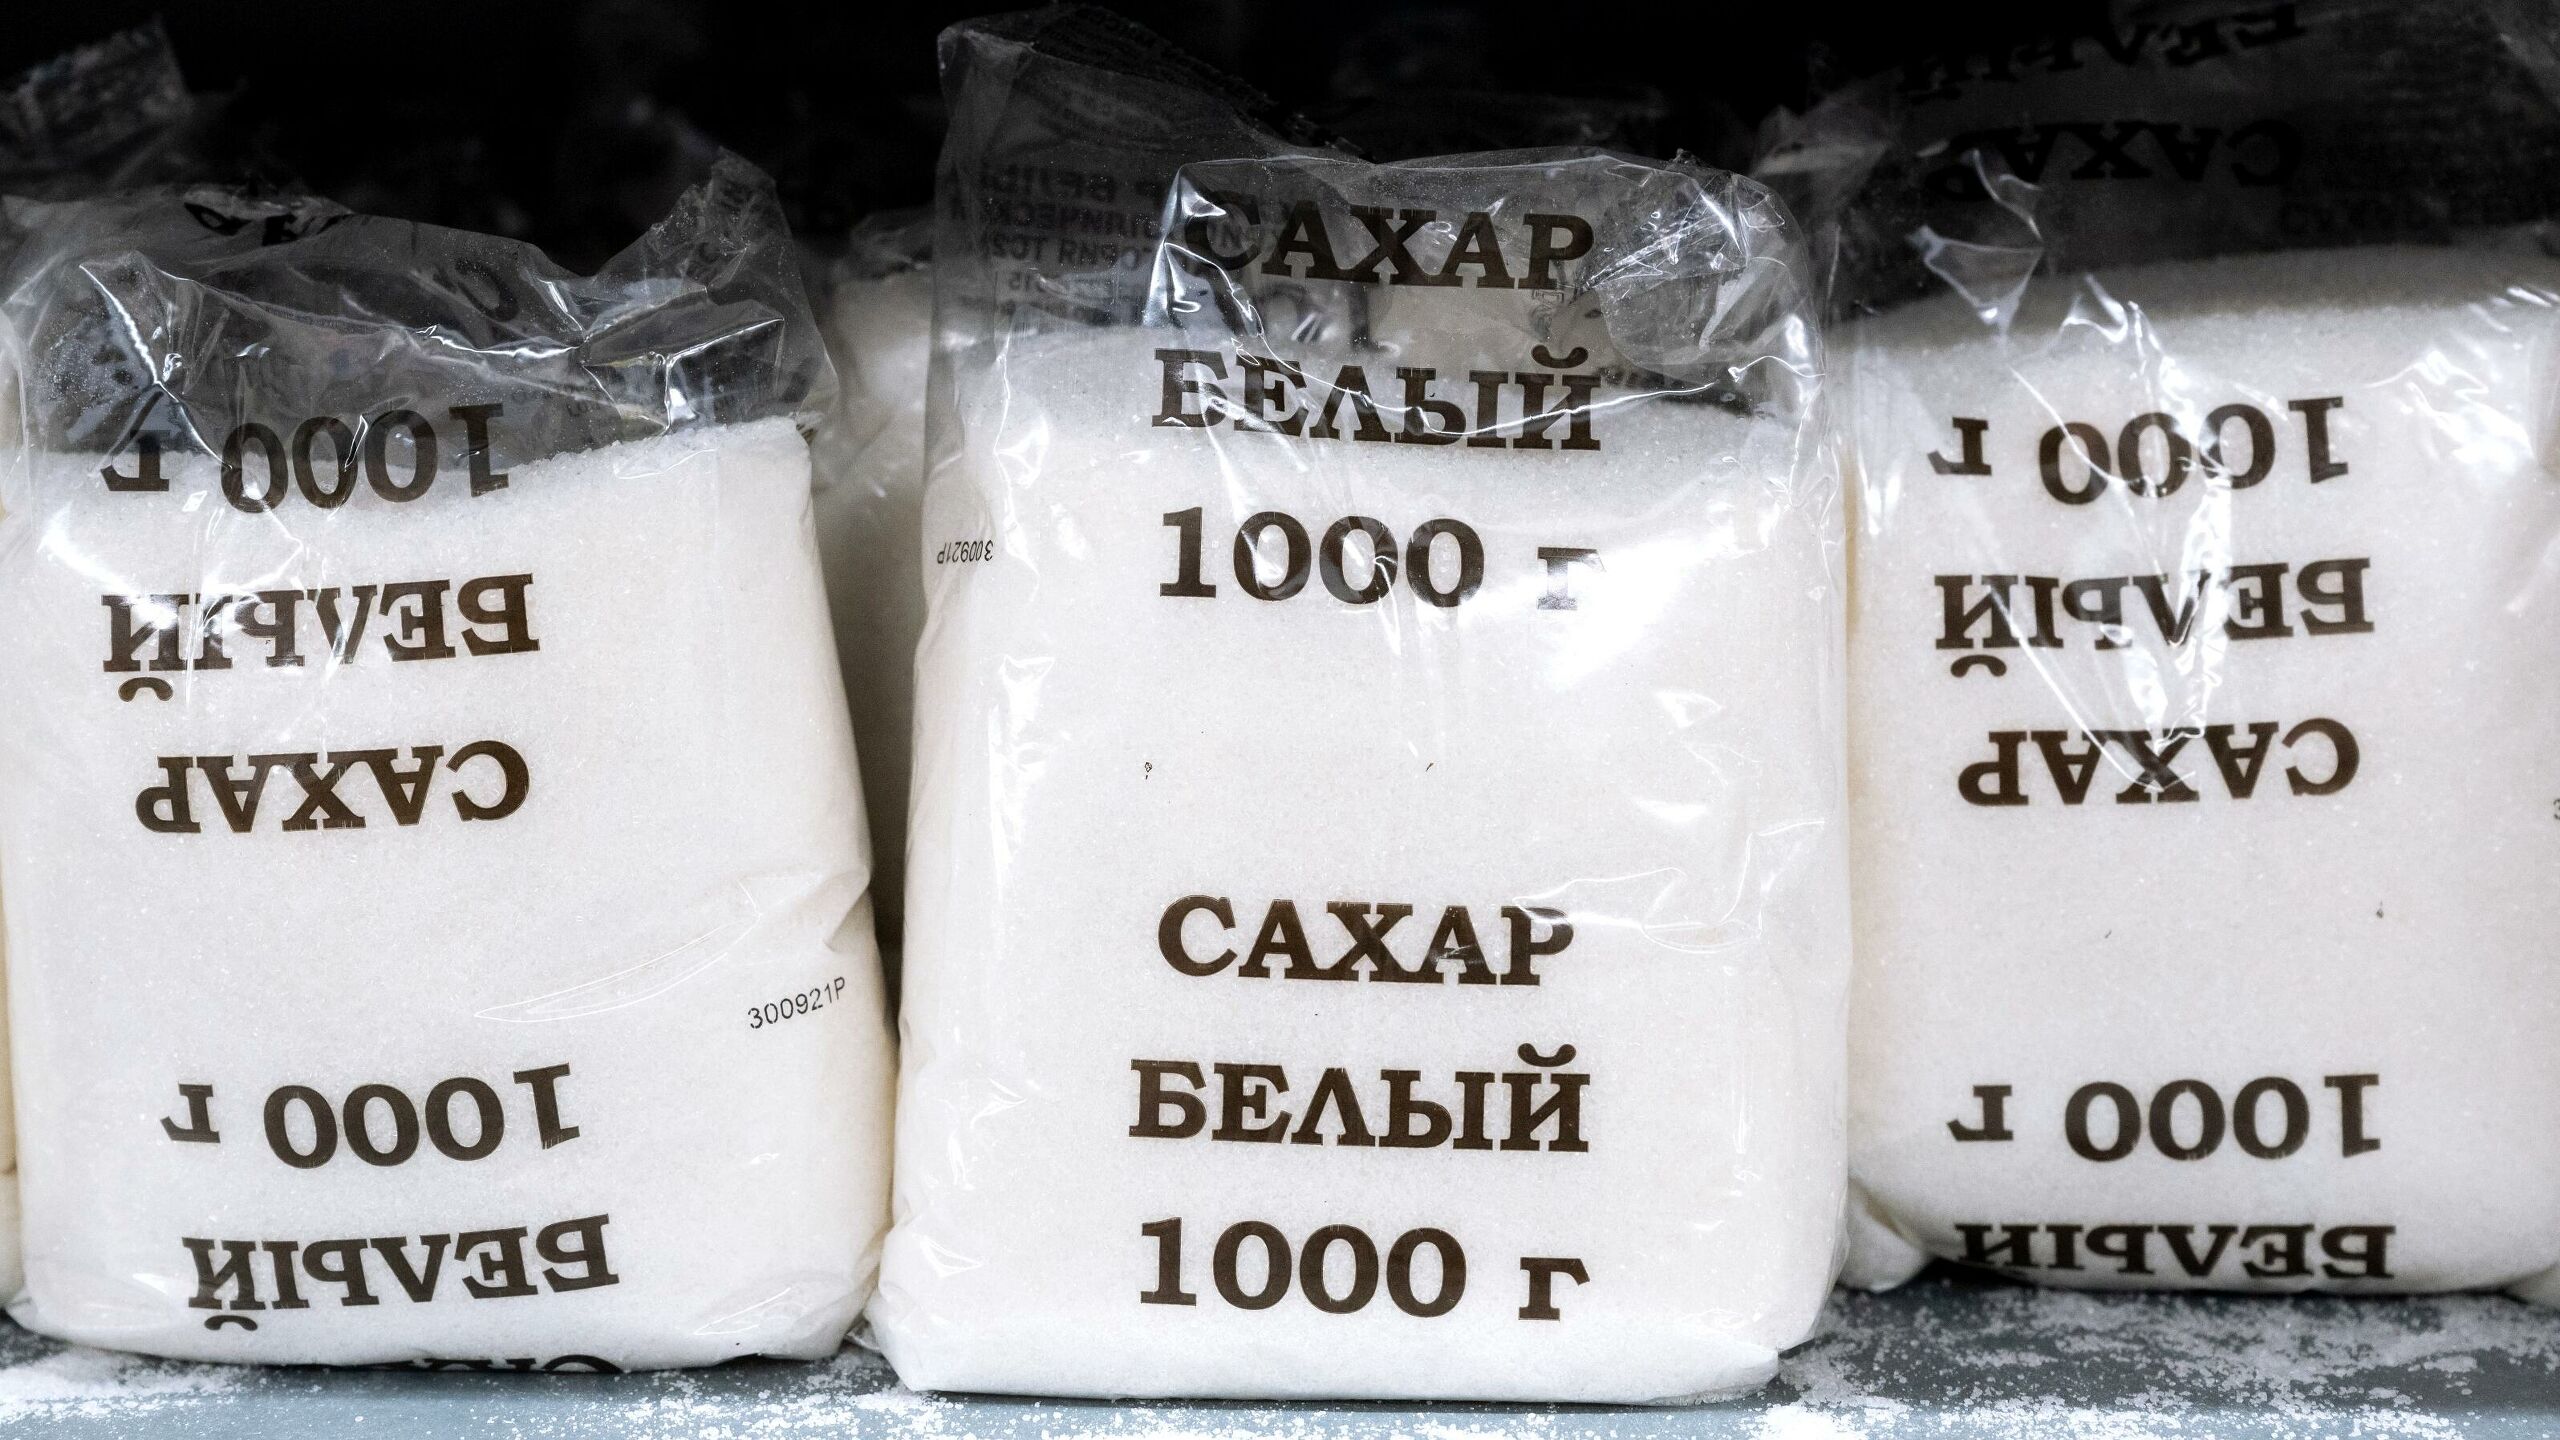 Сахар 20 рублей